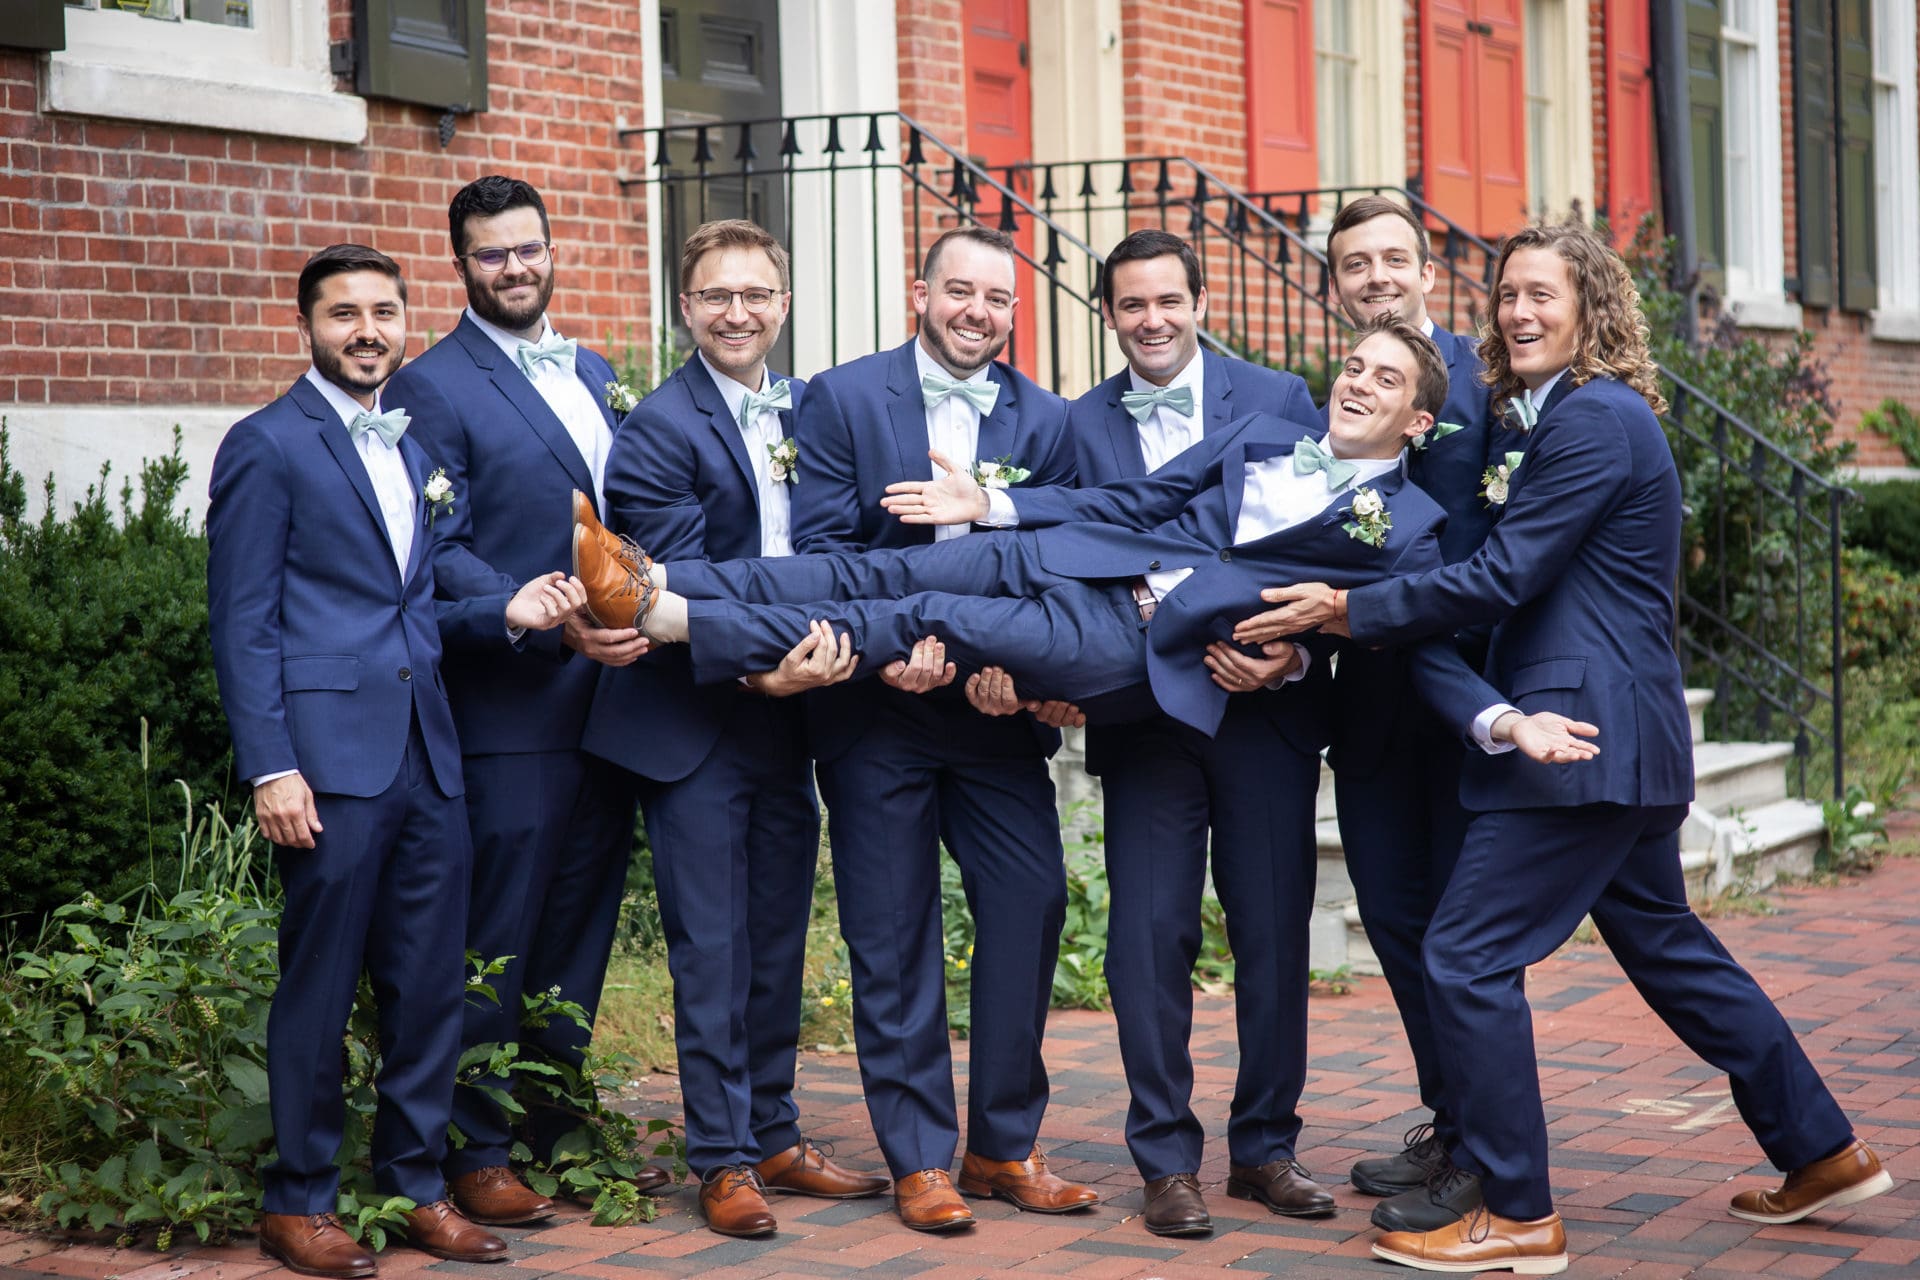 Groomsmen holding the groom sideways and laughing